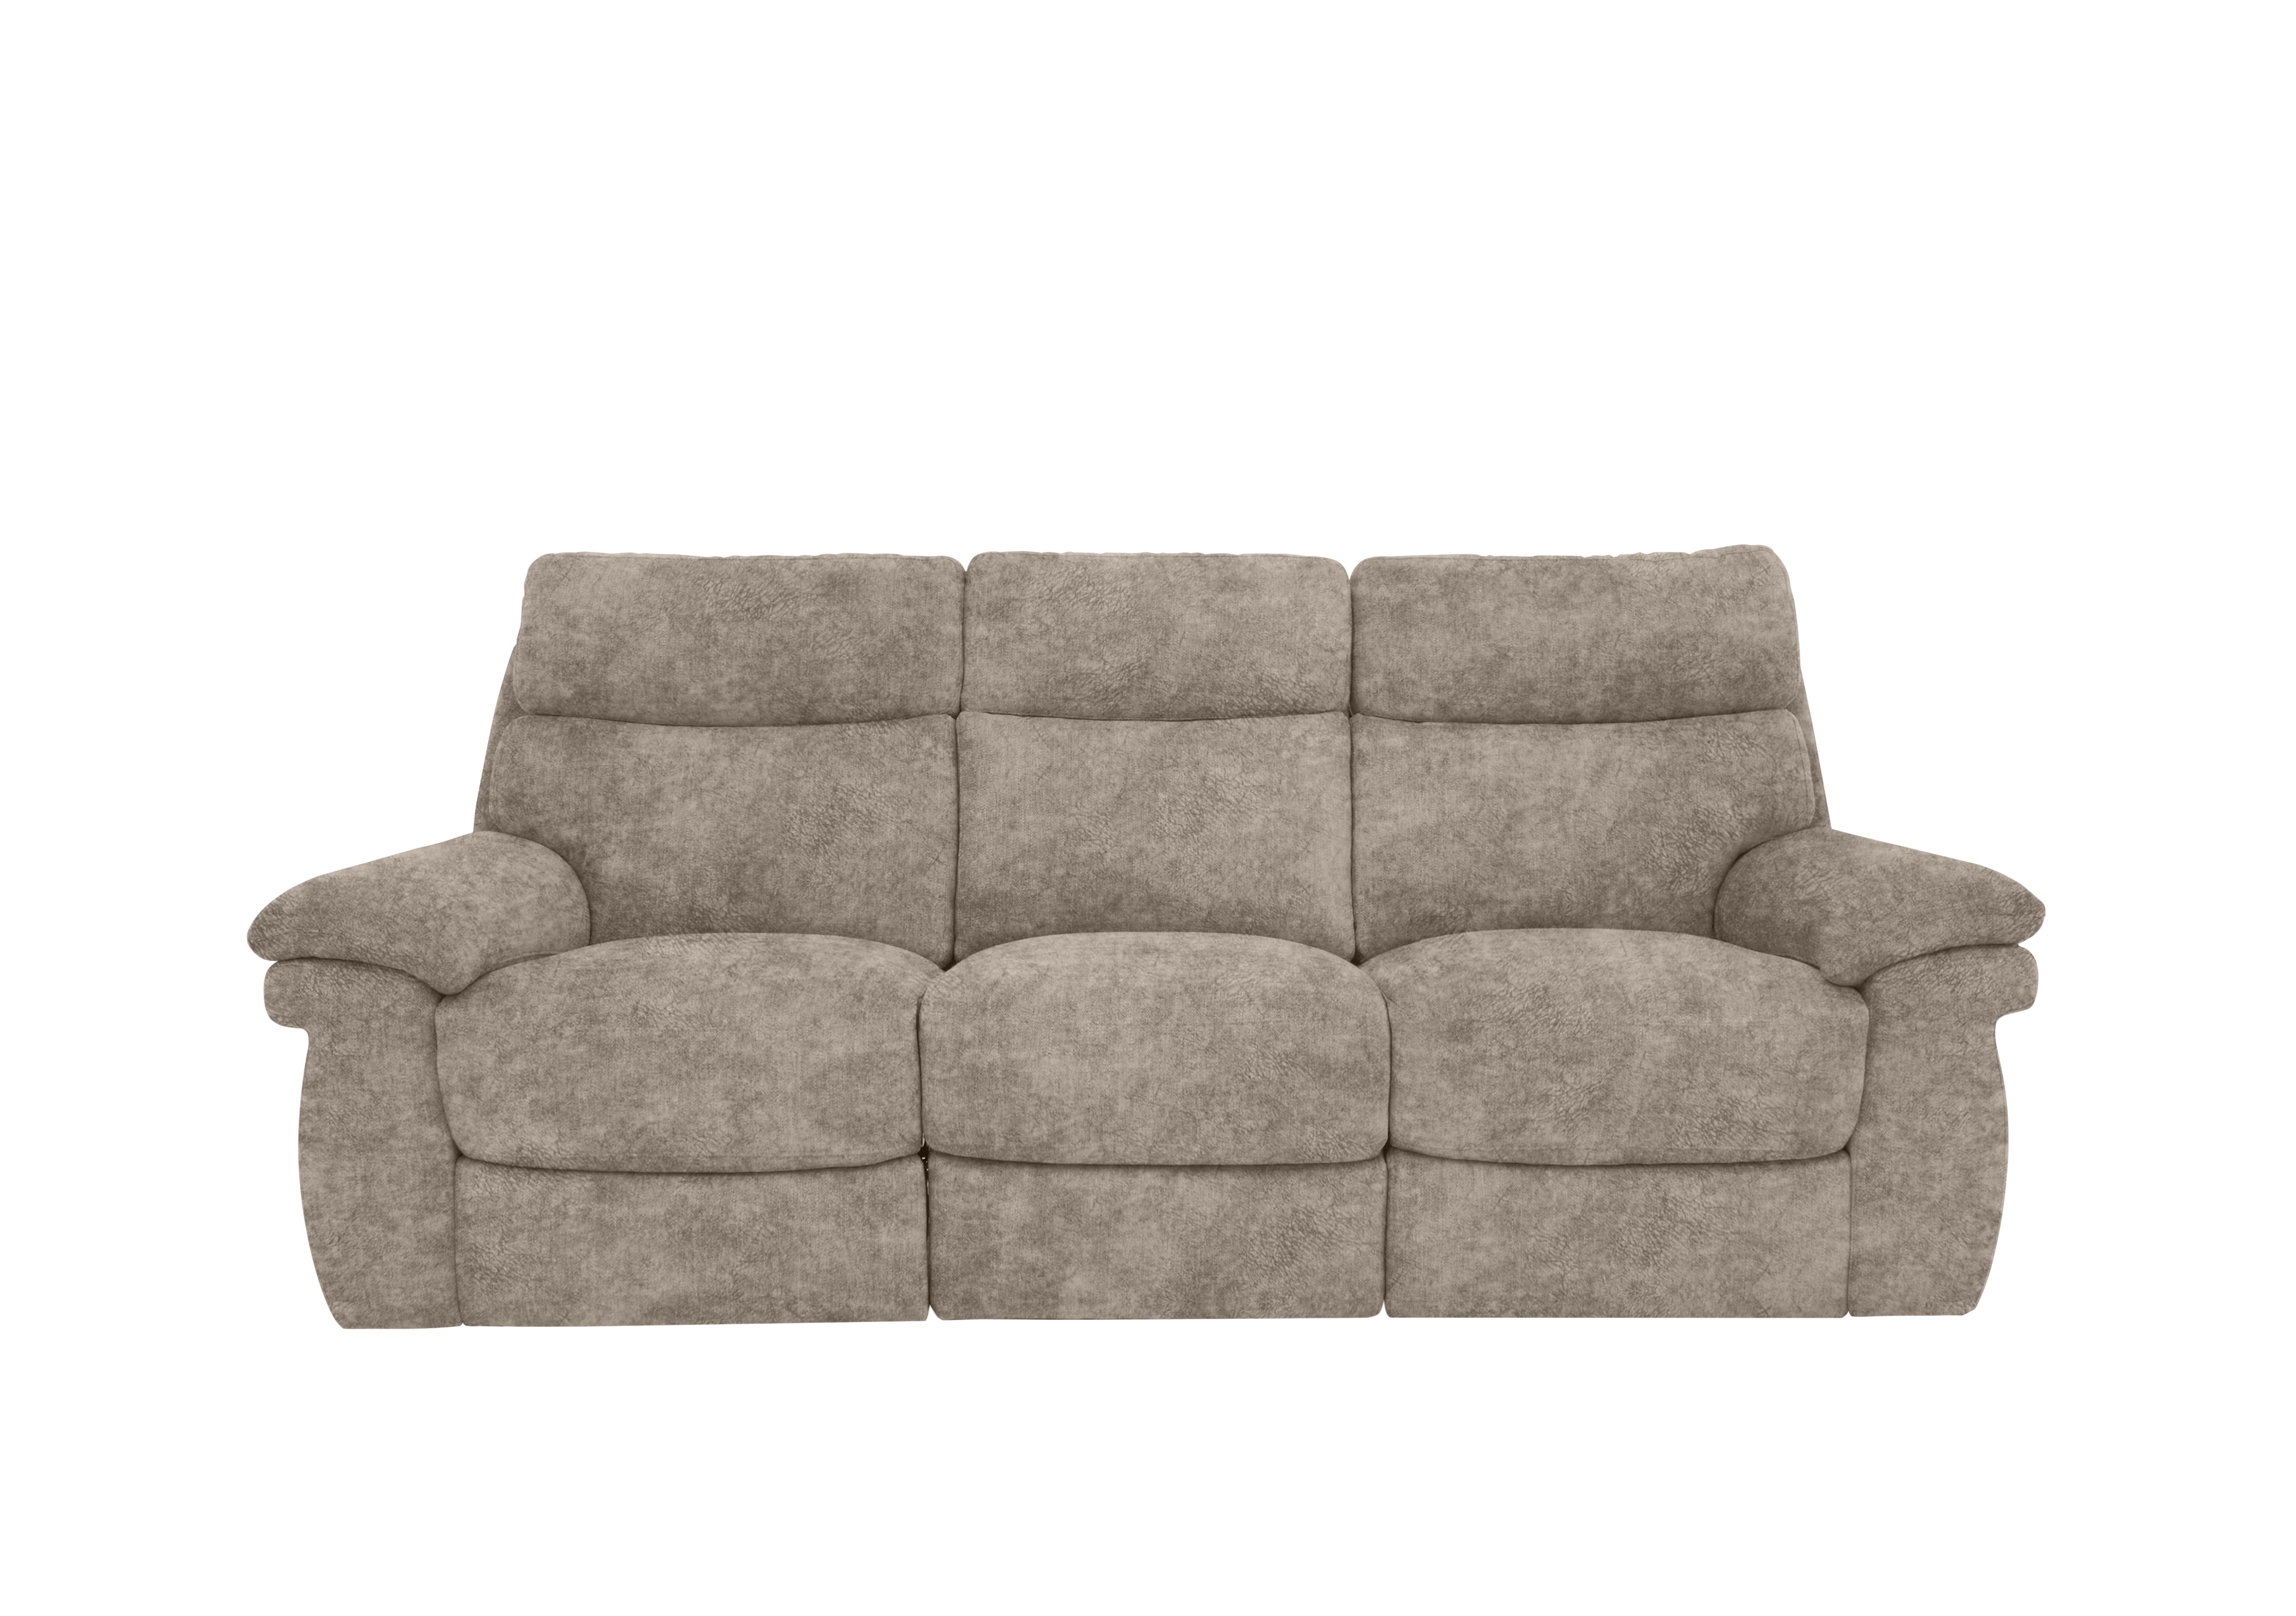 Serene 3 Seater Fabric Sofa in Bfa-Bnn-R29 Mink on Furniture Village